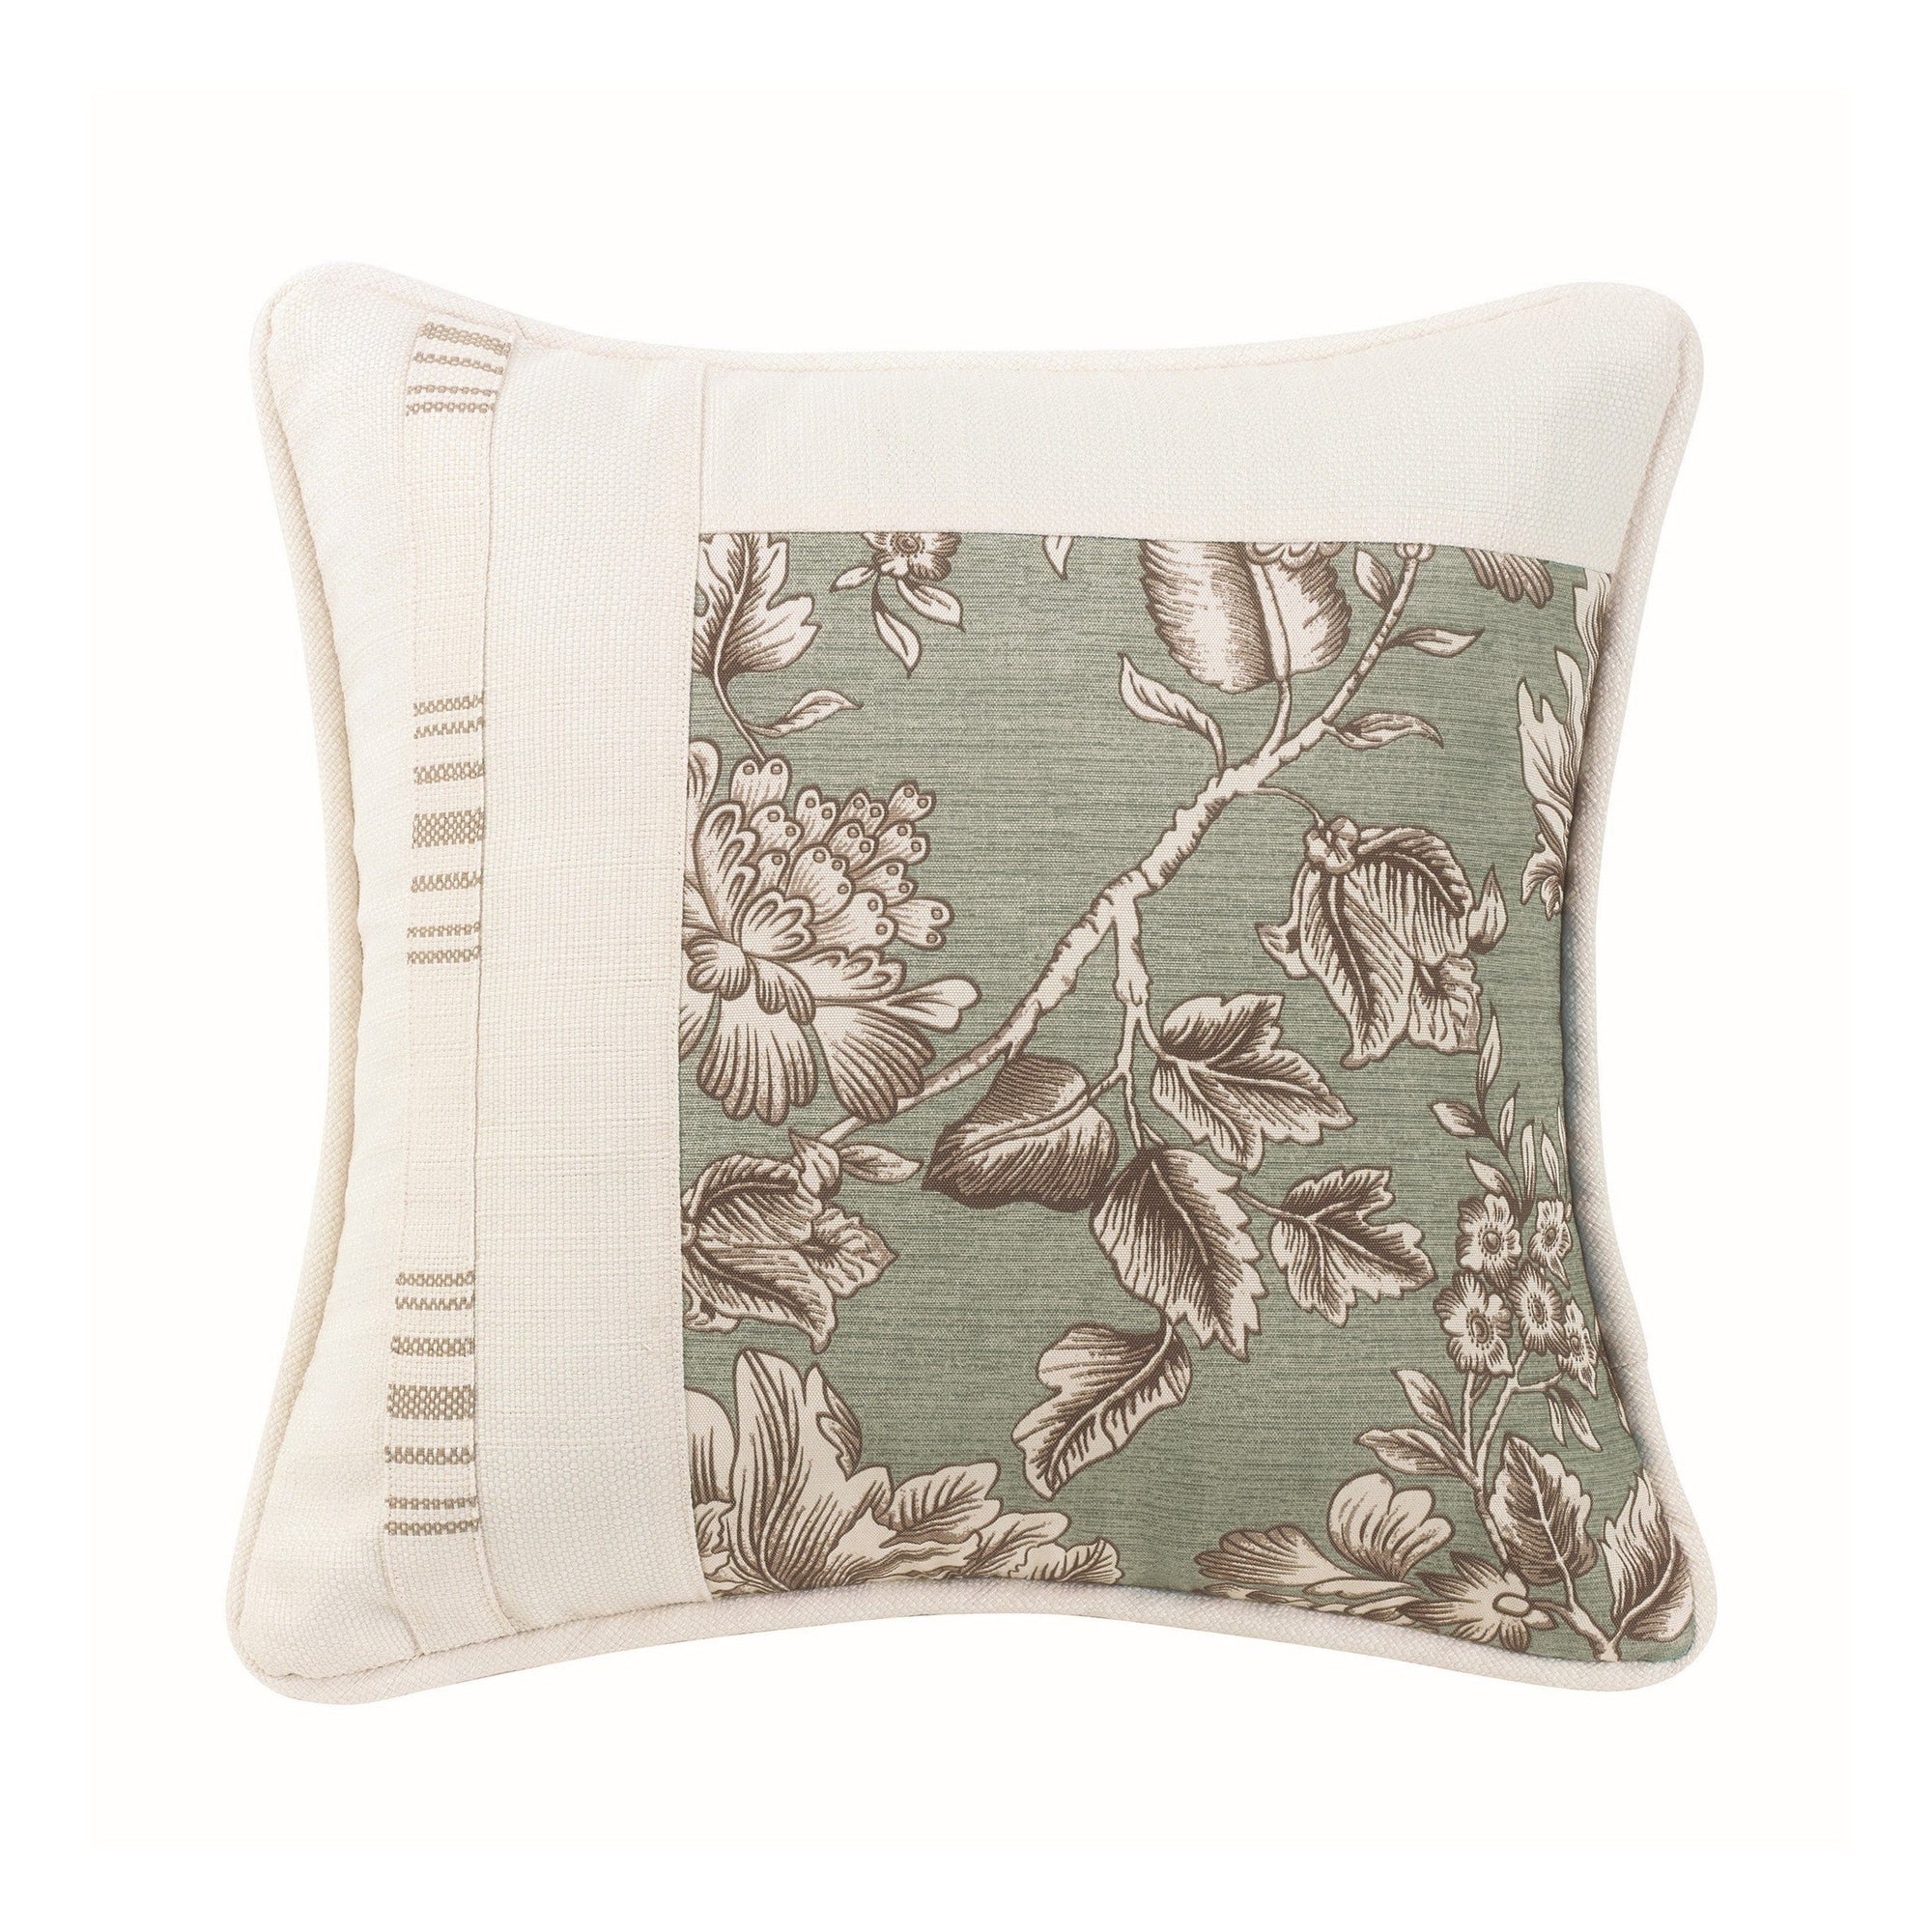 Gramercy Square Pieced Pillow w/ Floral, Stripe & White Linen Texture, 18x18 Pillow